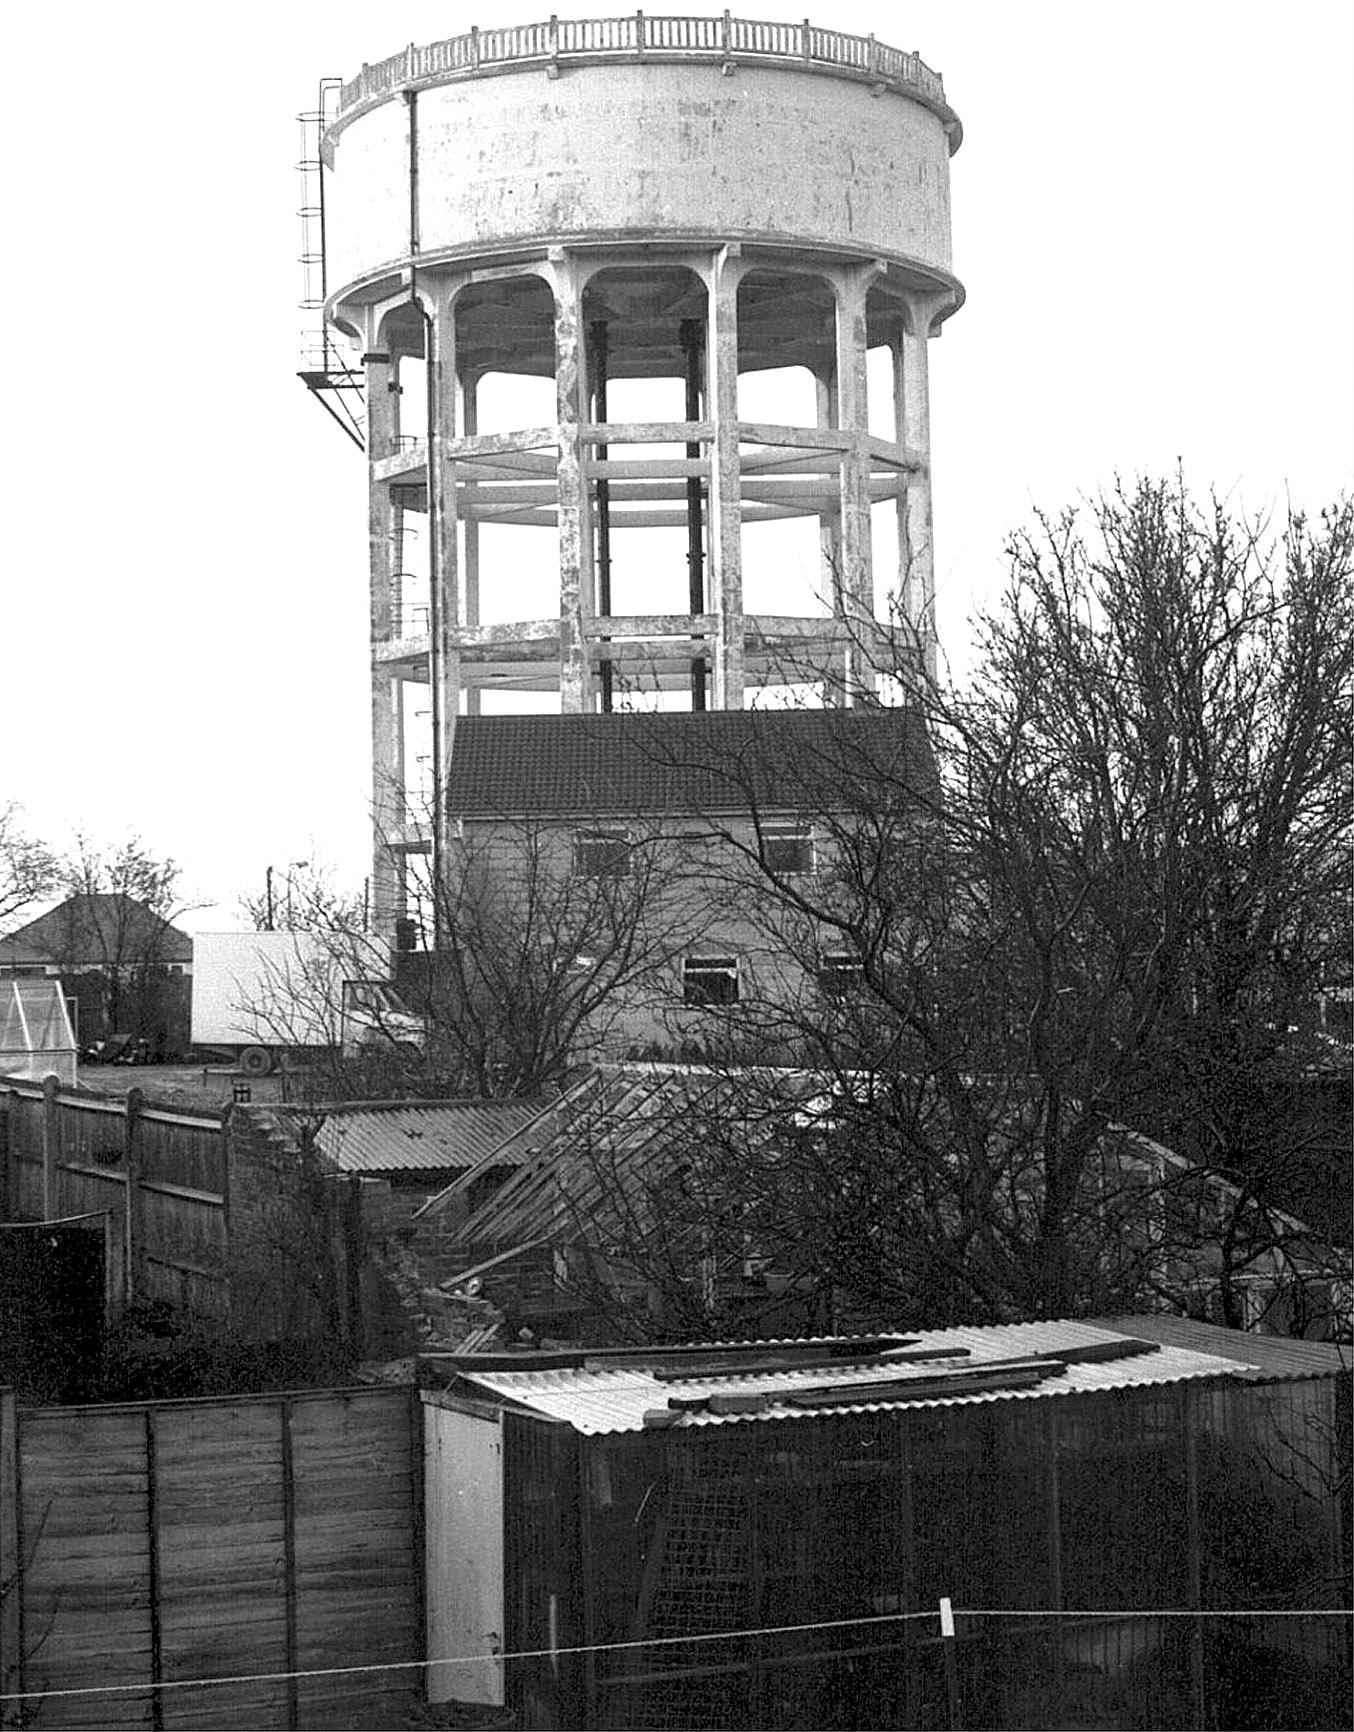 Water tower in Rhyl in 1982.